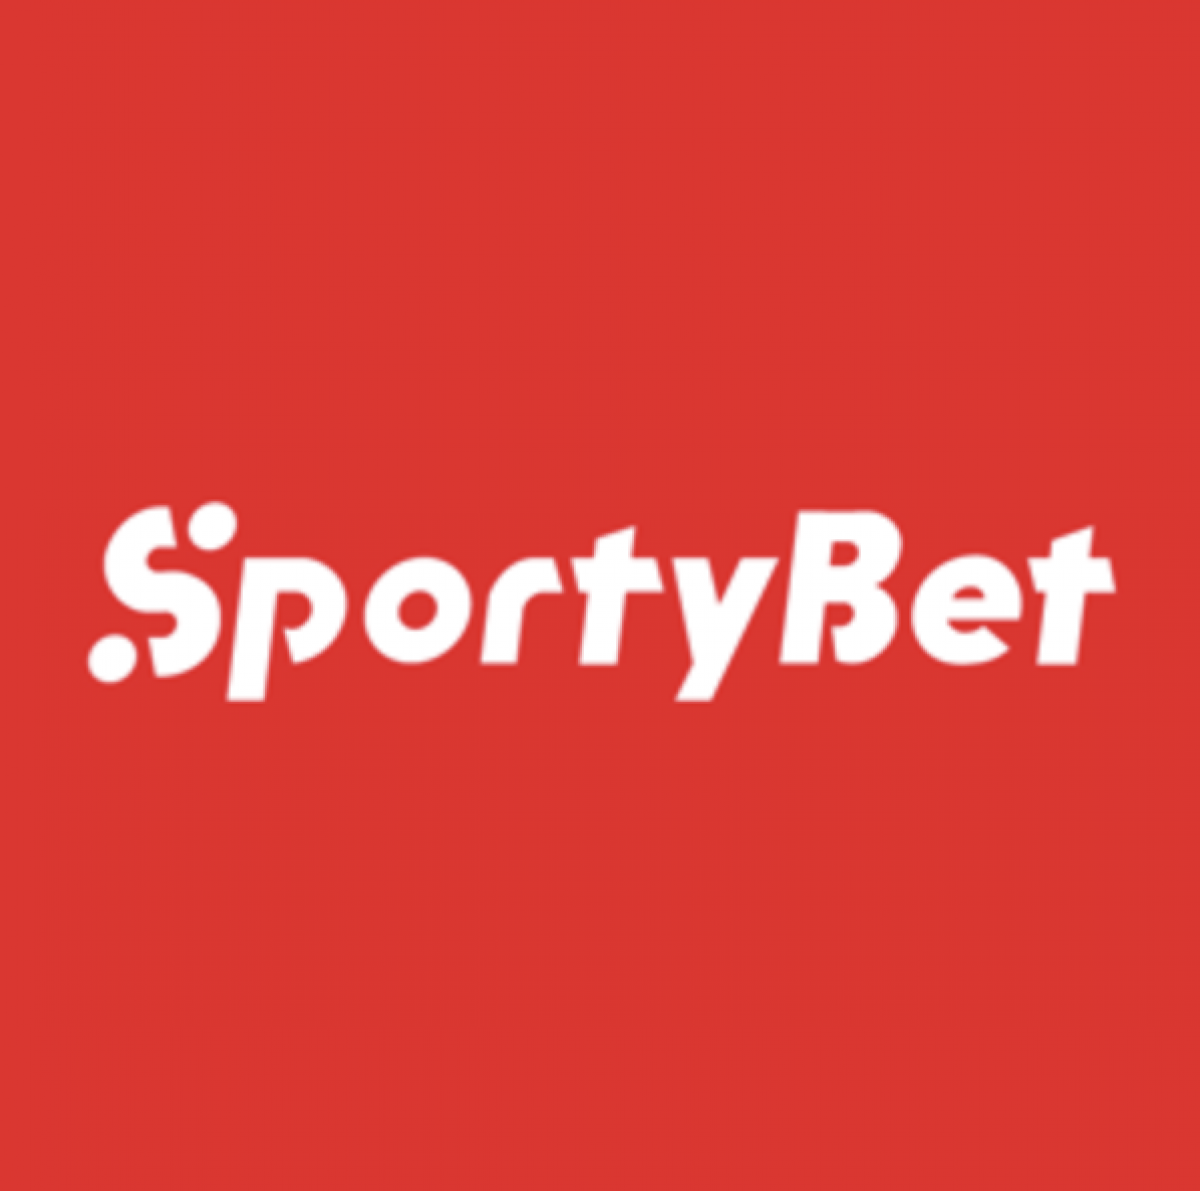 Download sportybet app in nigeria